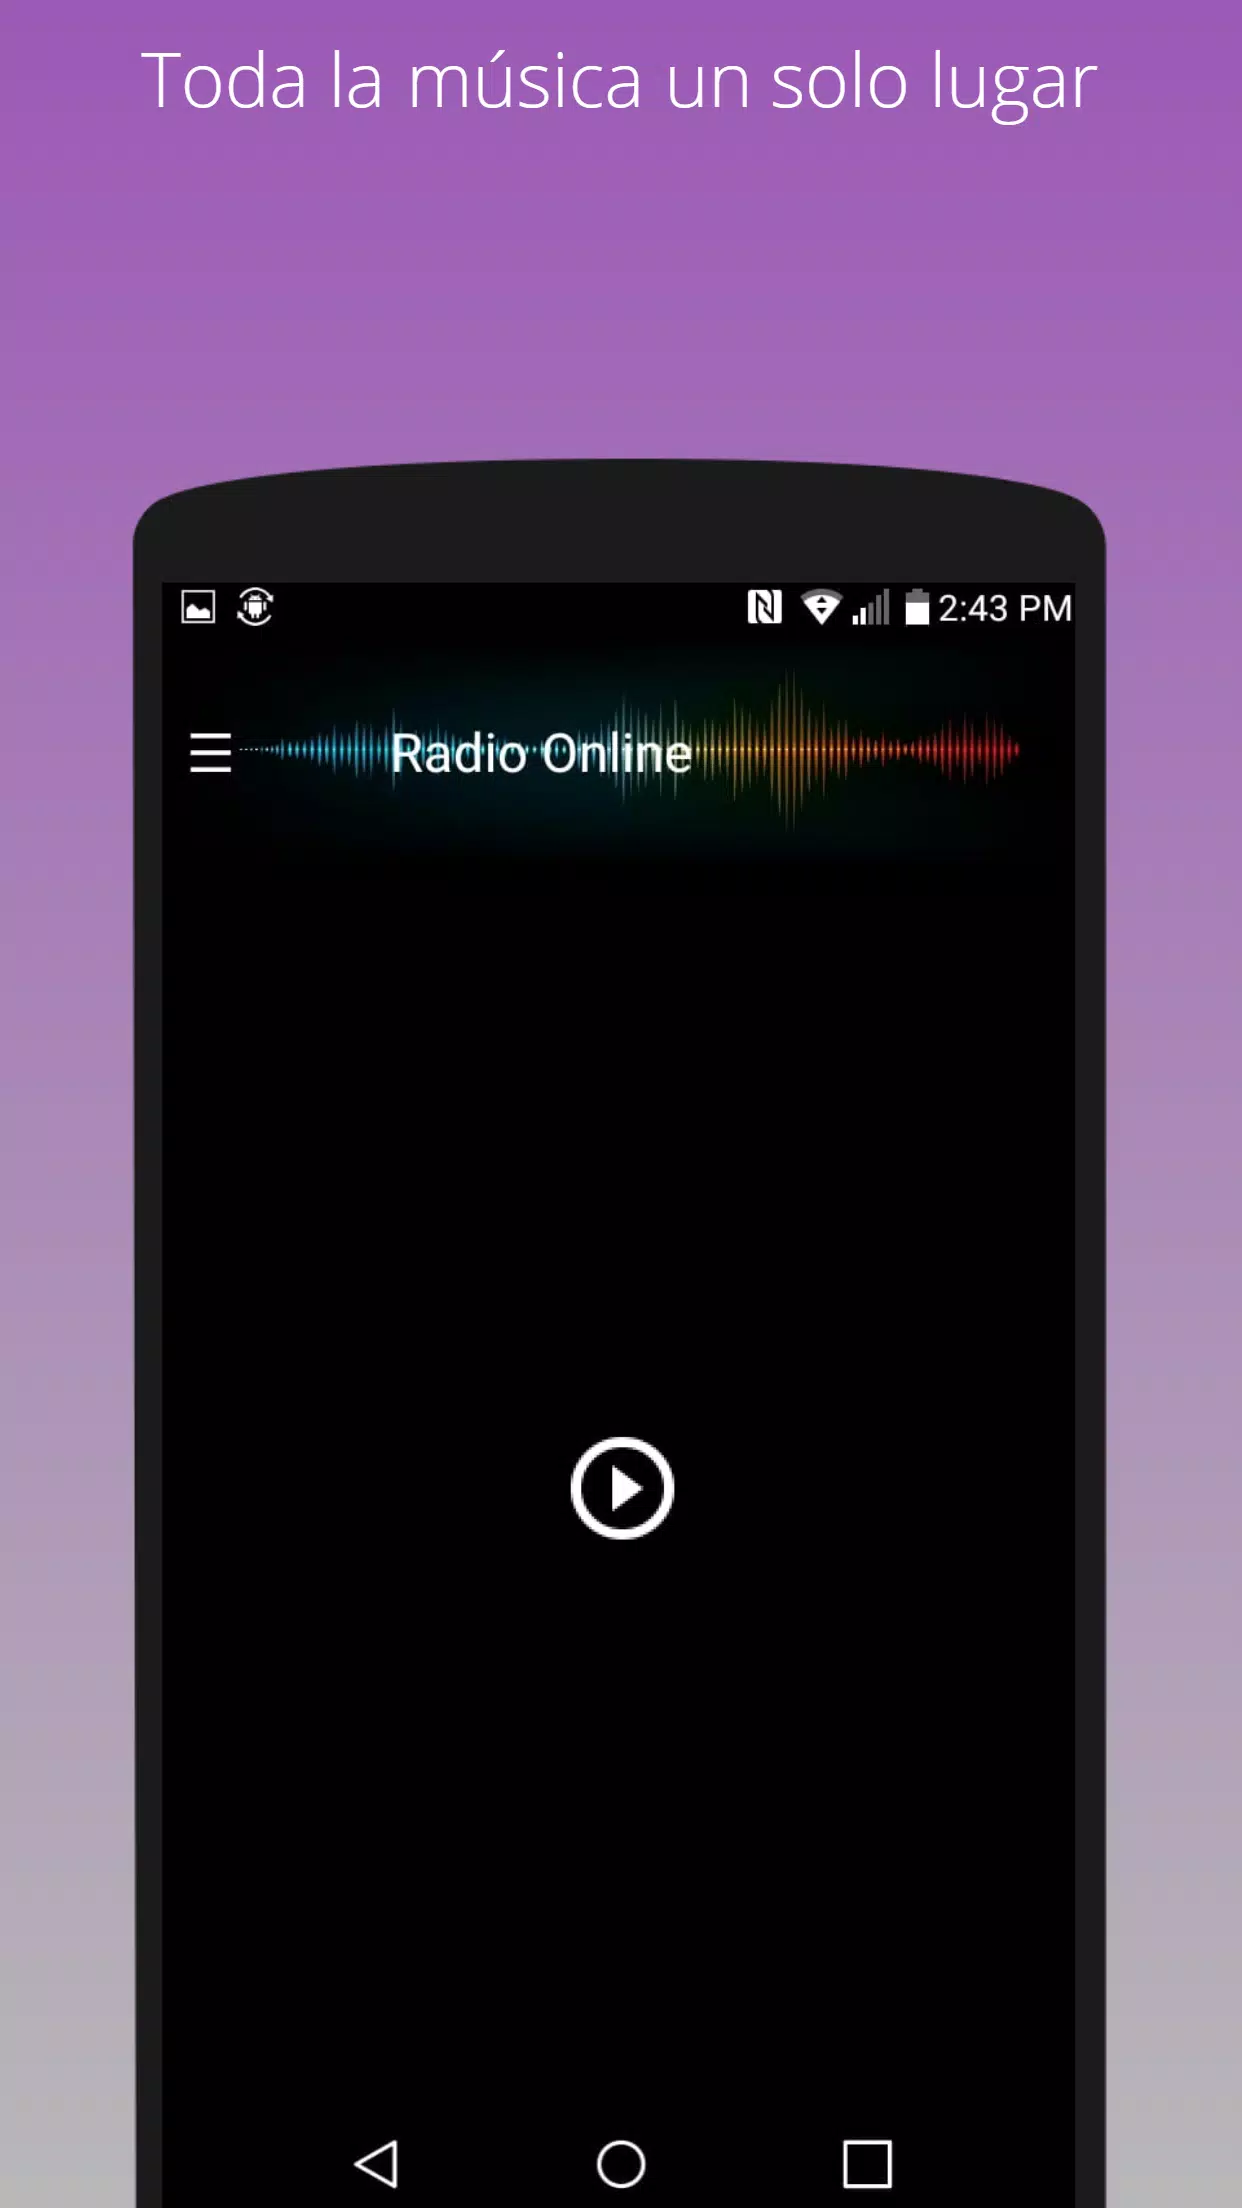 Radio One 103.7 FM en vivo emisora argentina APK voor Android Download